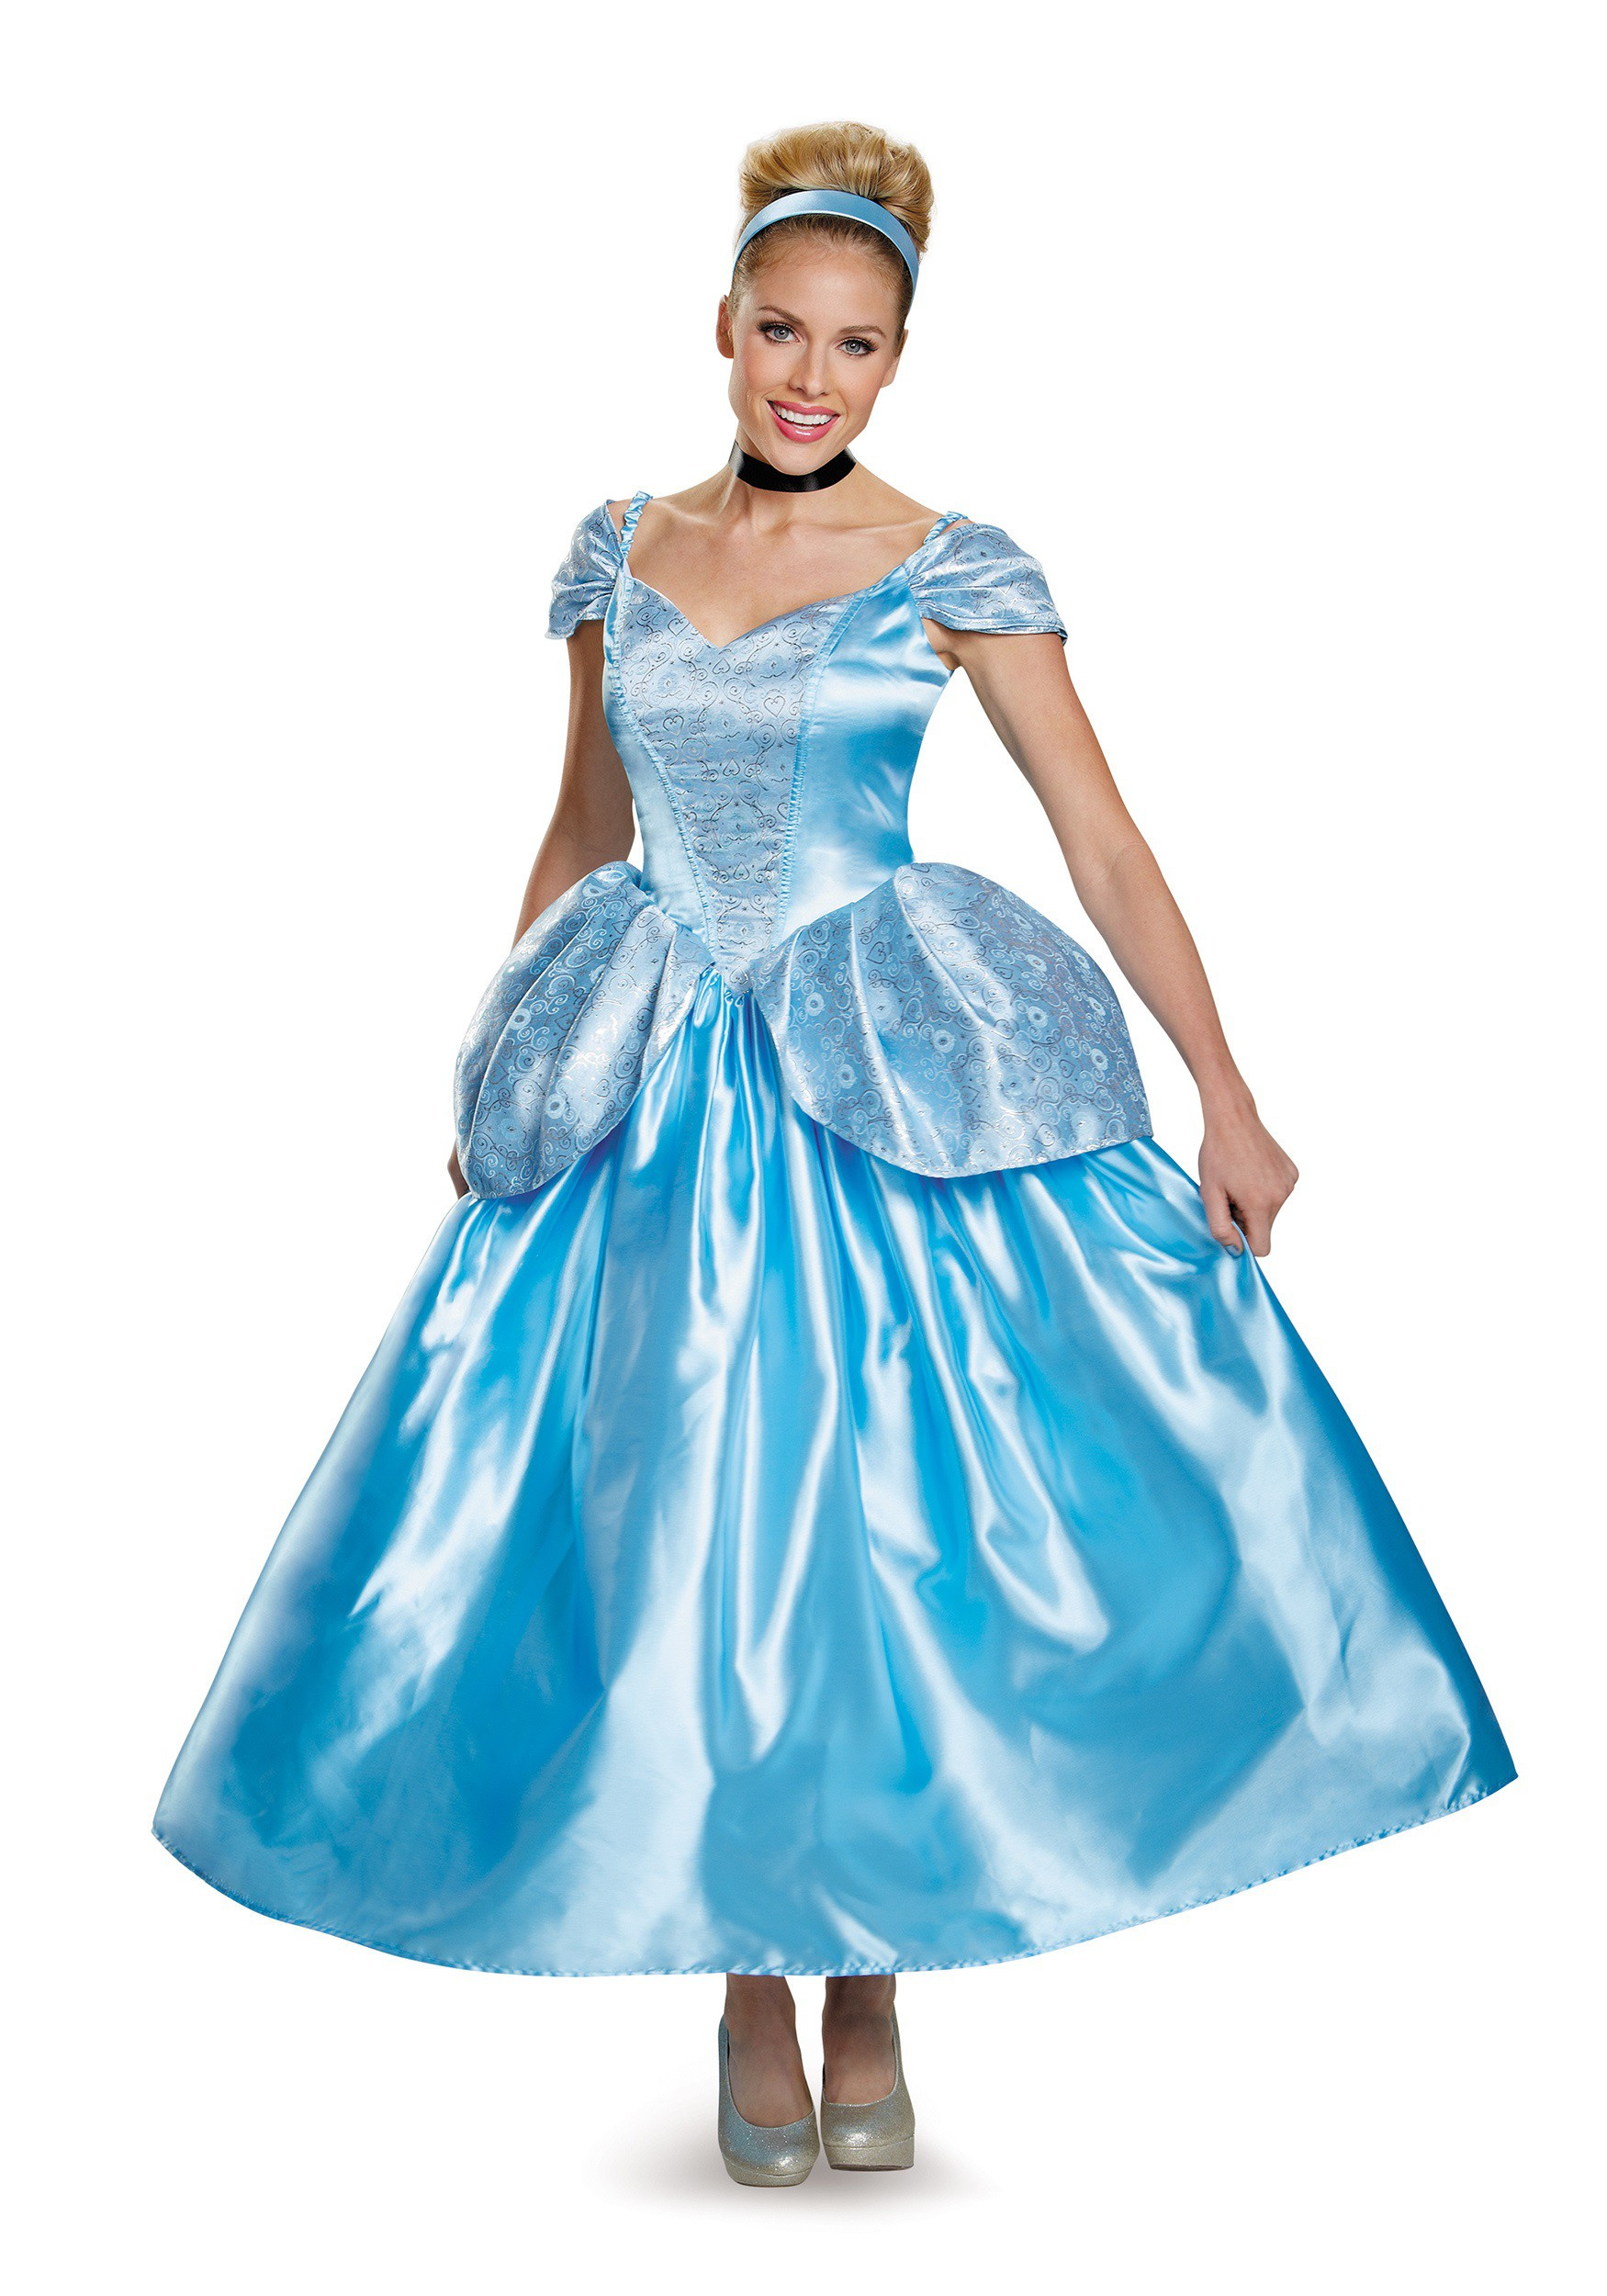 Best ideas about Cinderella DIY Costumes
. Save or Pin Women s Prestige Cinderella Costume Now.